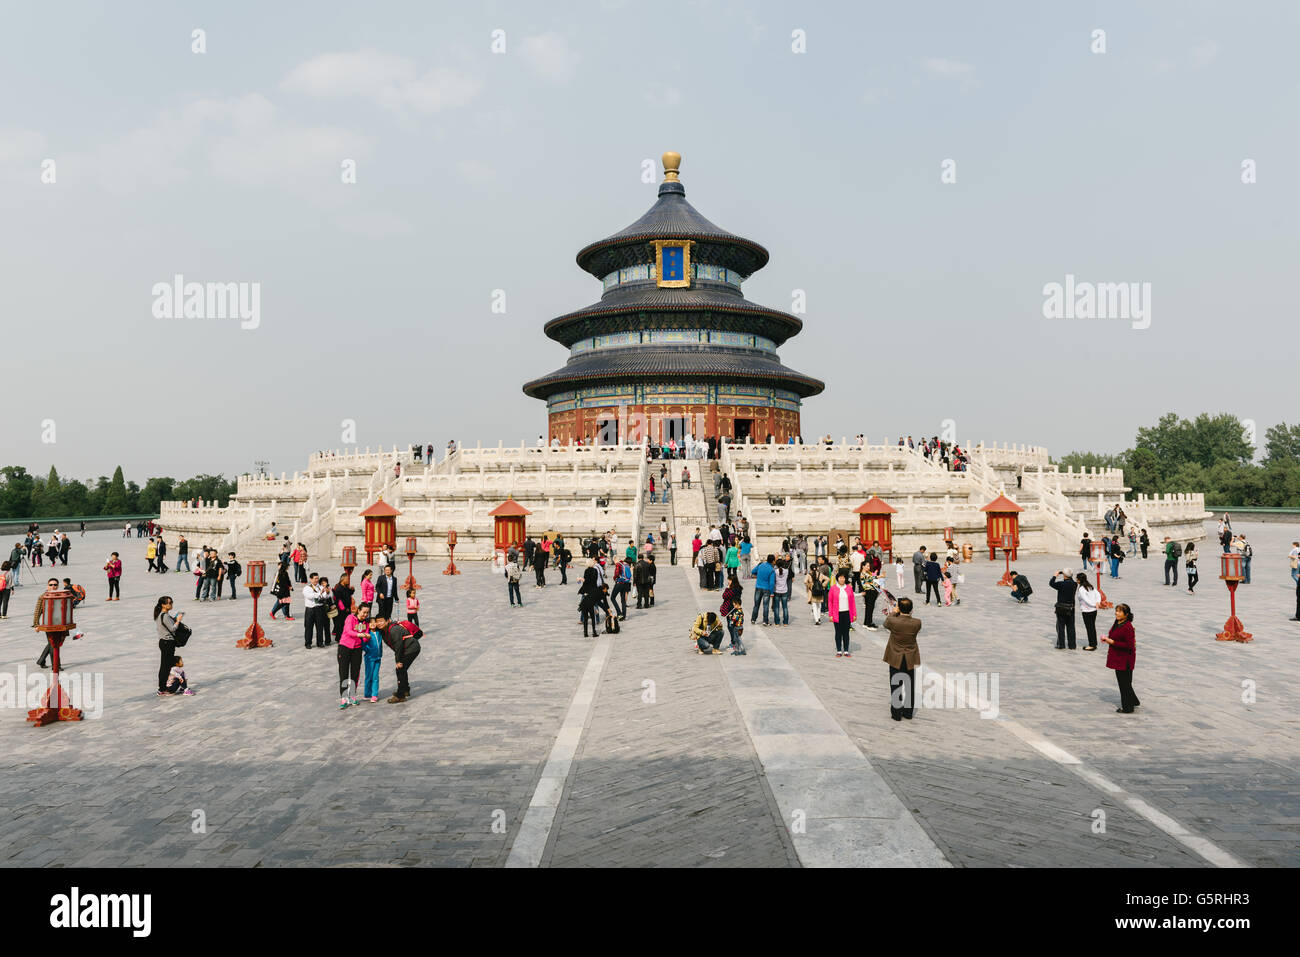 Peking, China - 18. Oktober 2015: Besucher der Himmelstempel in Peking, China. Der Himmelstempel gilt als ein o Stockfoto